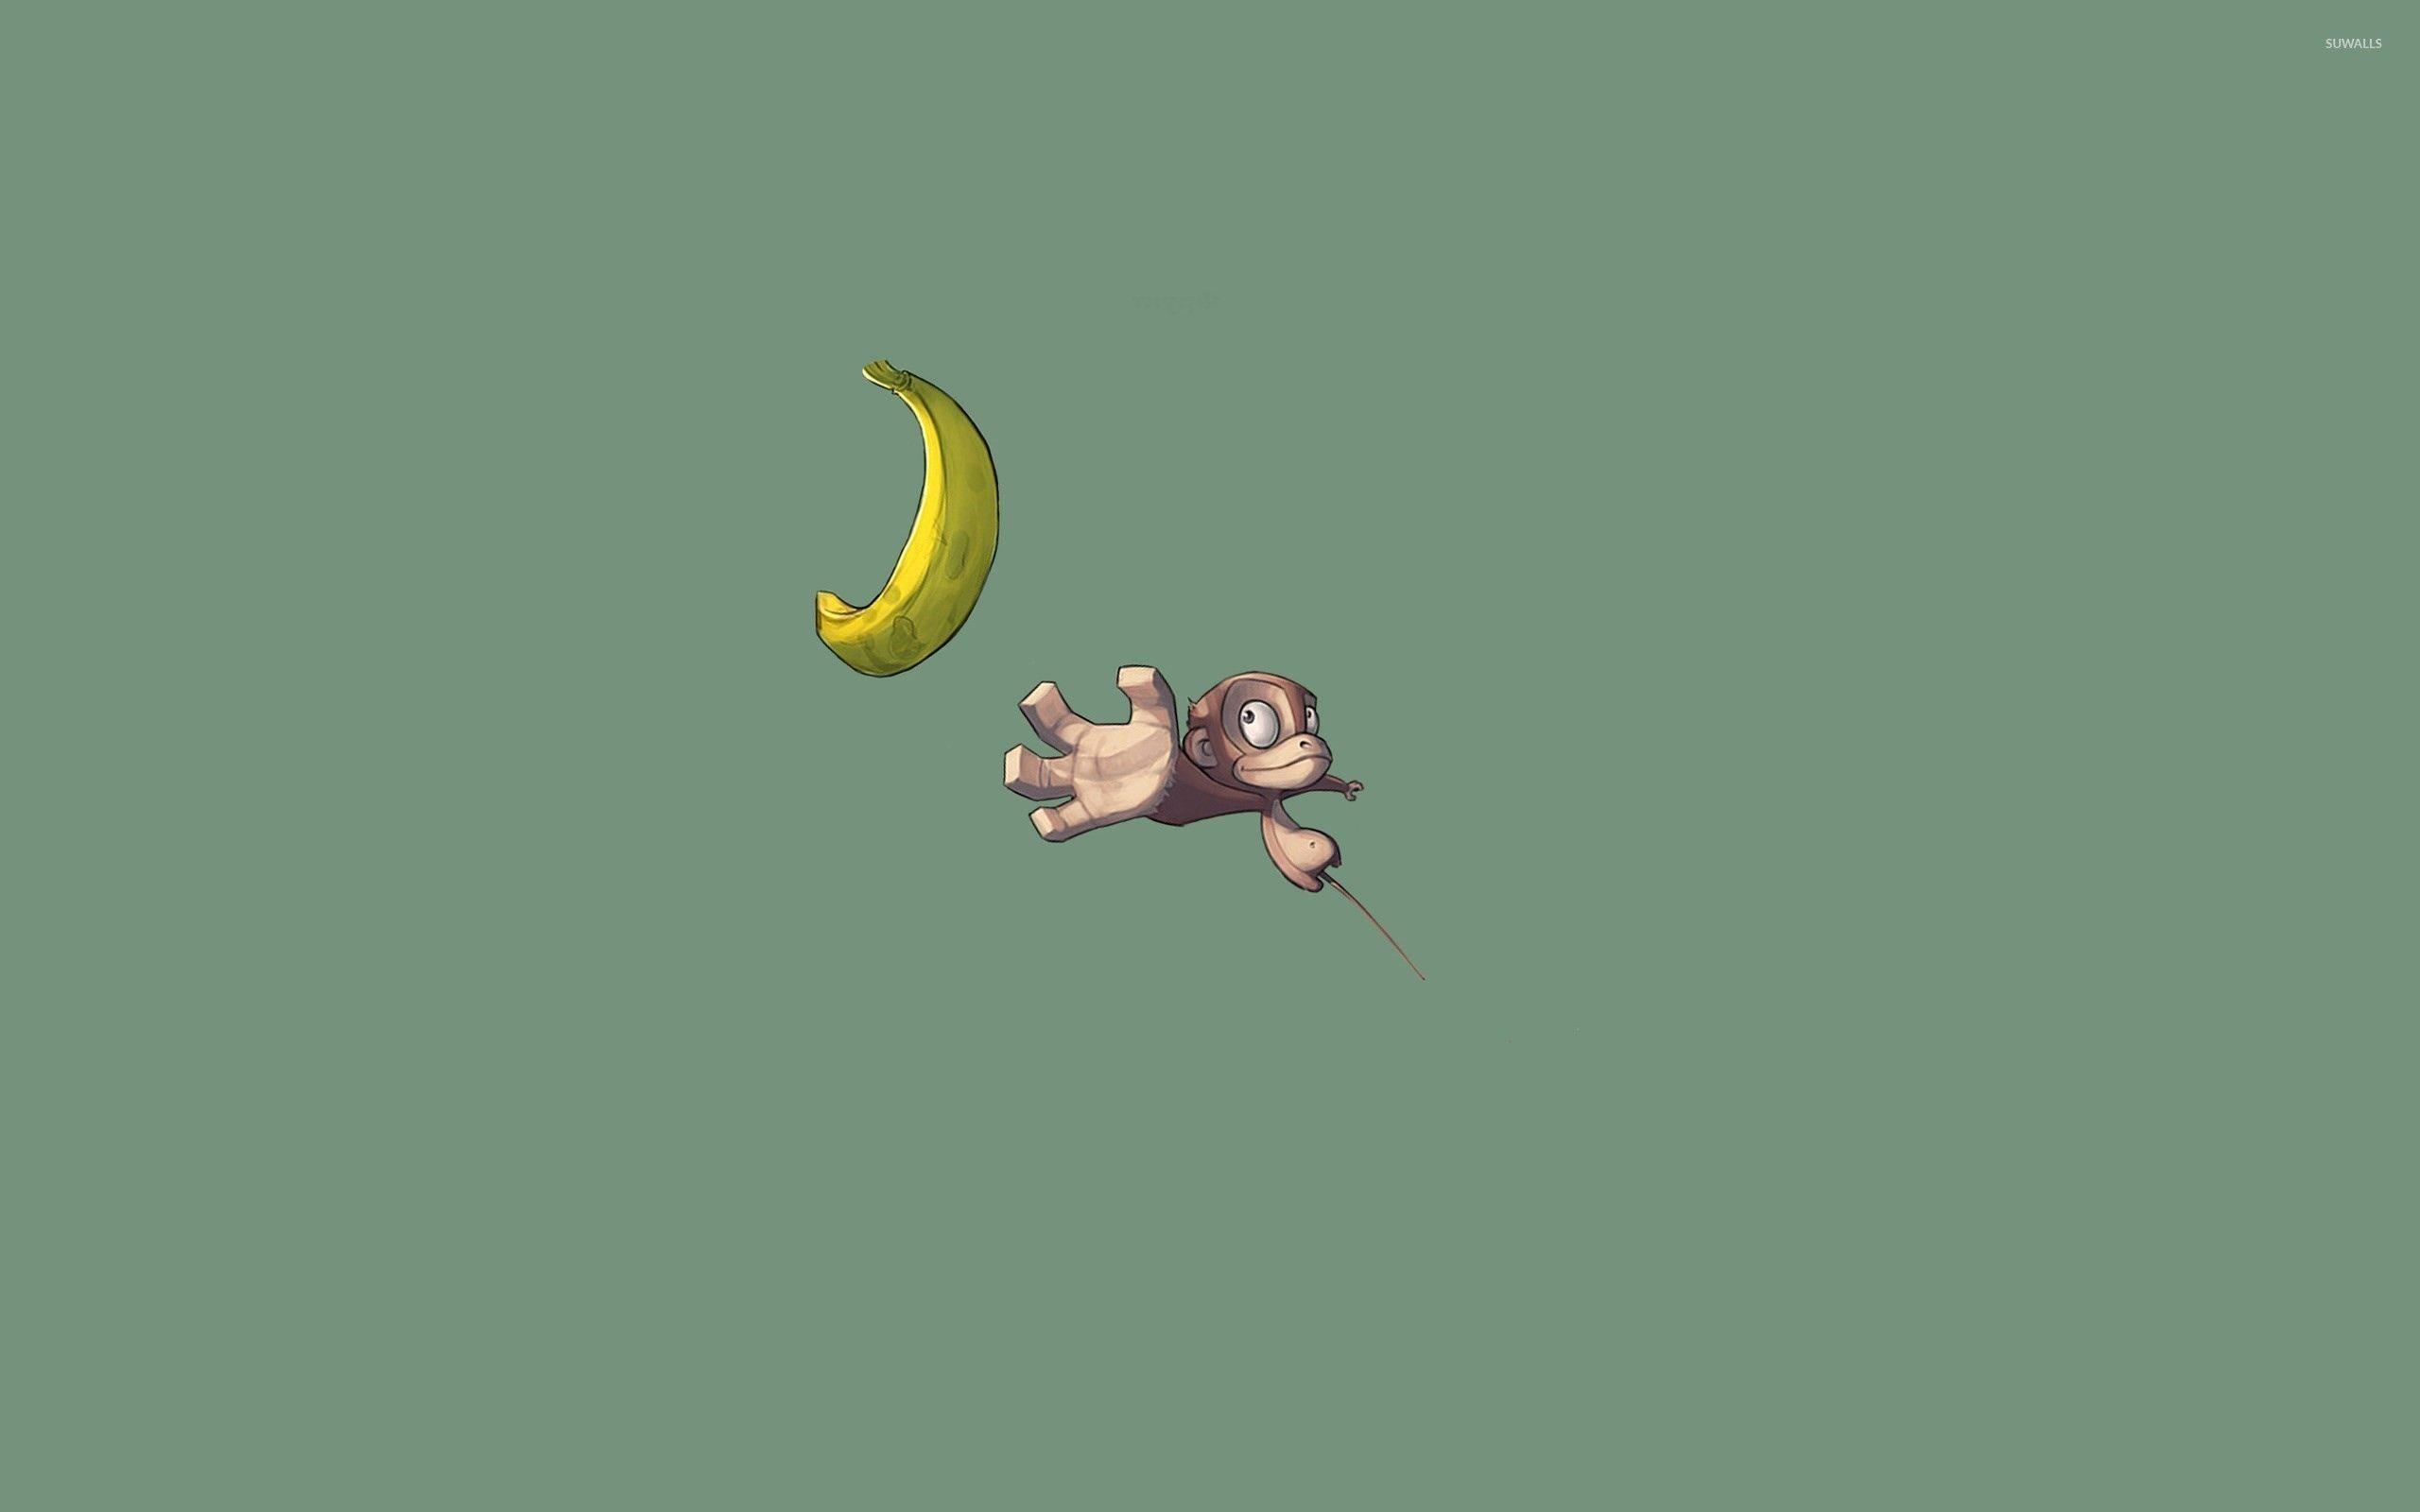 Monkey reaching for the banana wallpaper wallpaper